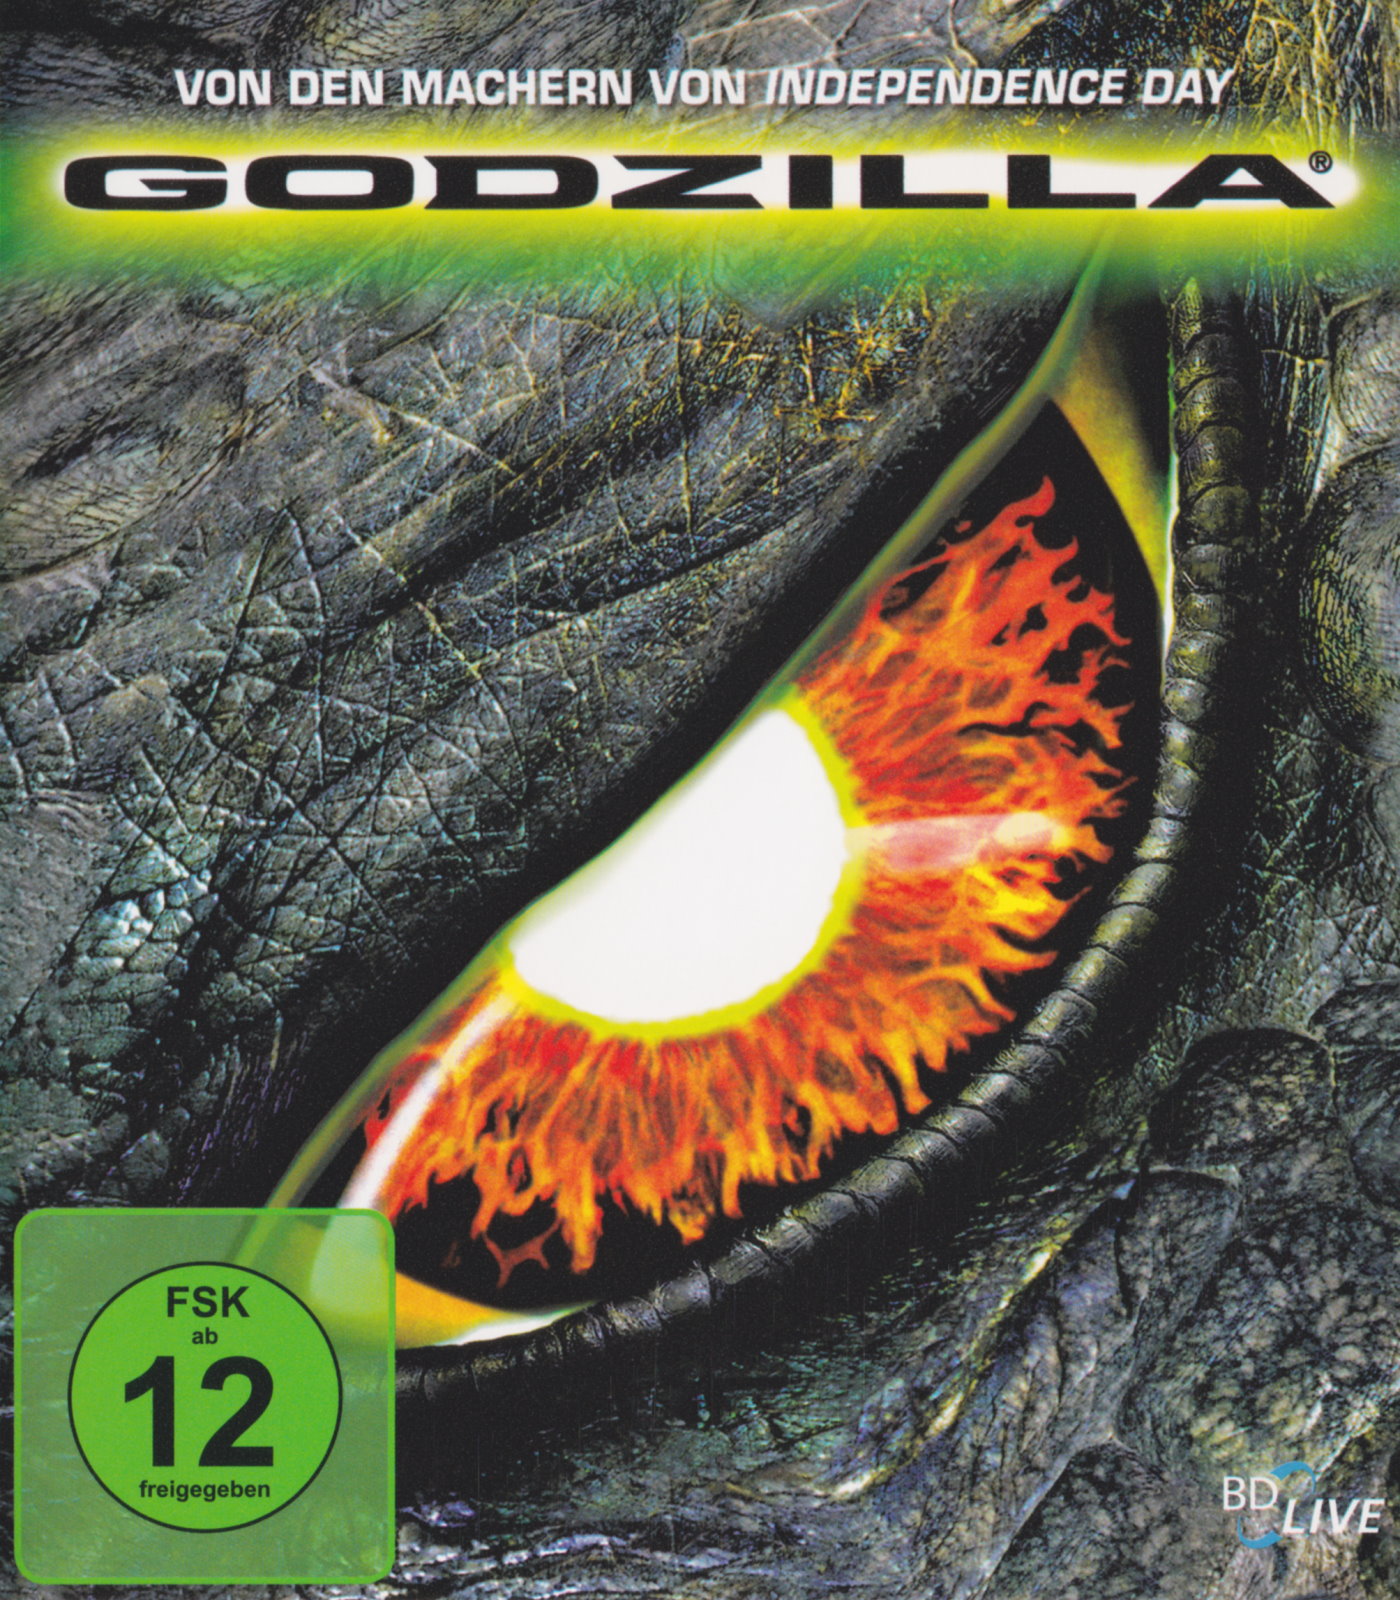 Cover - Godzilla.jpg